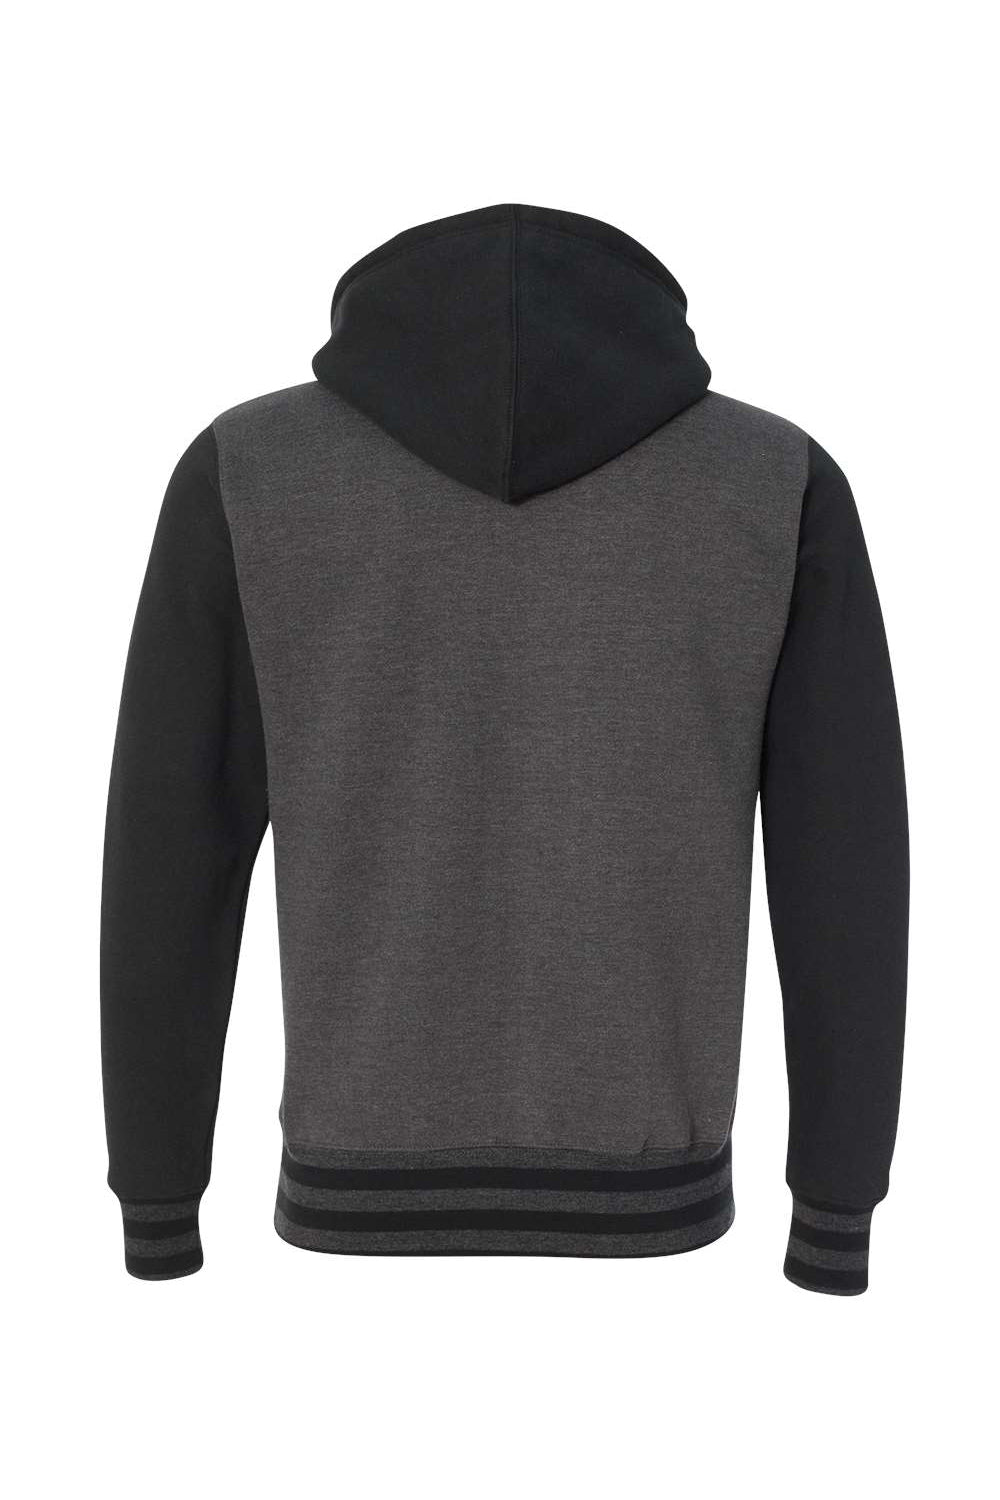 Independent Trading Co. IND45UVZ Mens Varsity Full Zip Hooded Sweatshirt Hoodie Heather Charcoal Grey/Black Flat Back